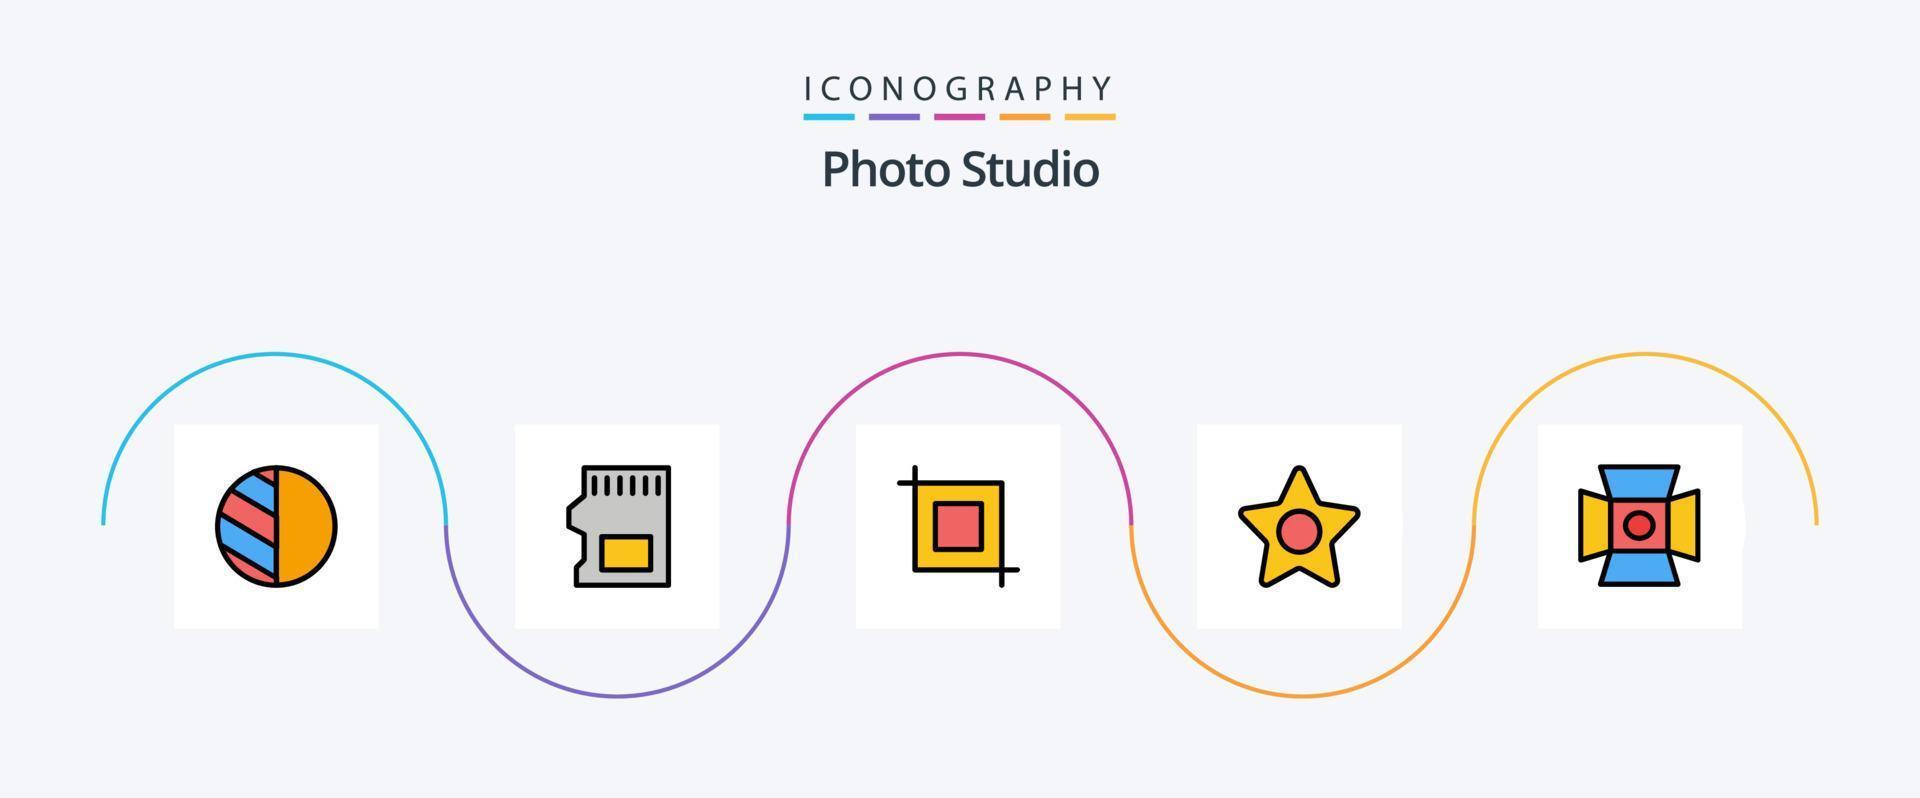 Foto studio linje fylld platt 5 ikon packa Inklusive . fotografi. verktyg. Foto. studio vektor